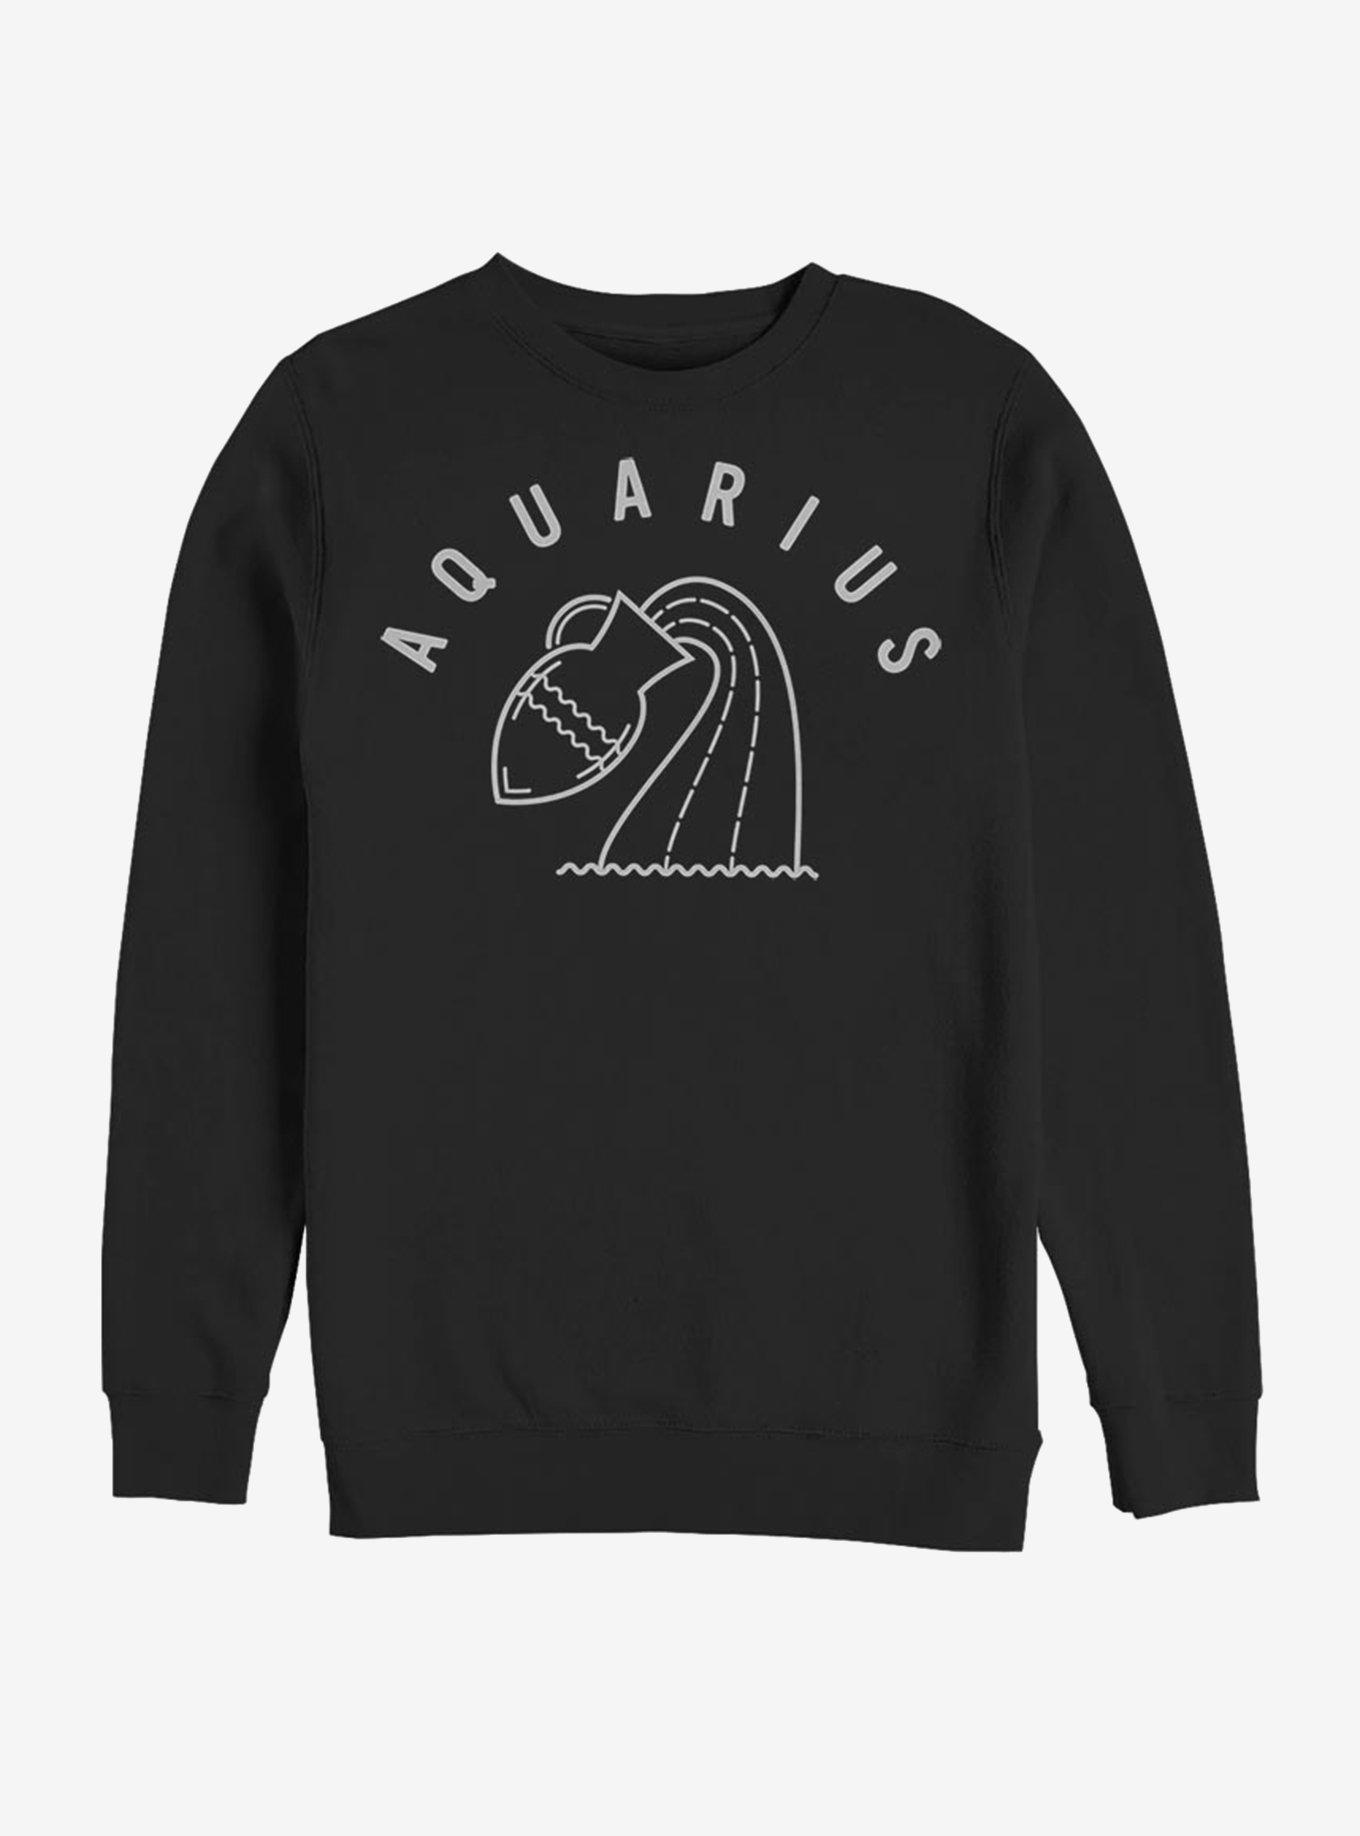 Aquarius Astrology Water Sign Sweatshirt, BLACK, hi-res